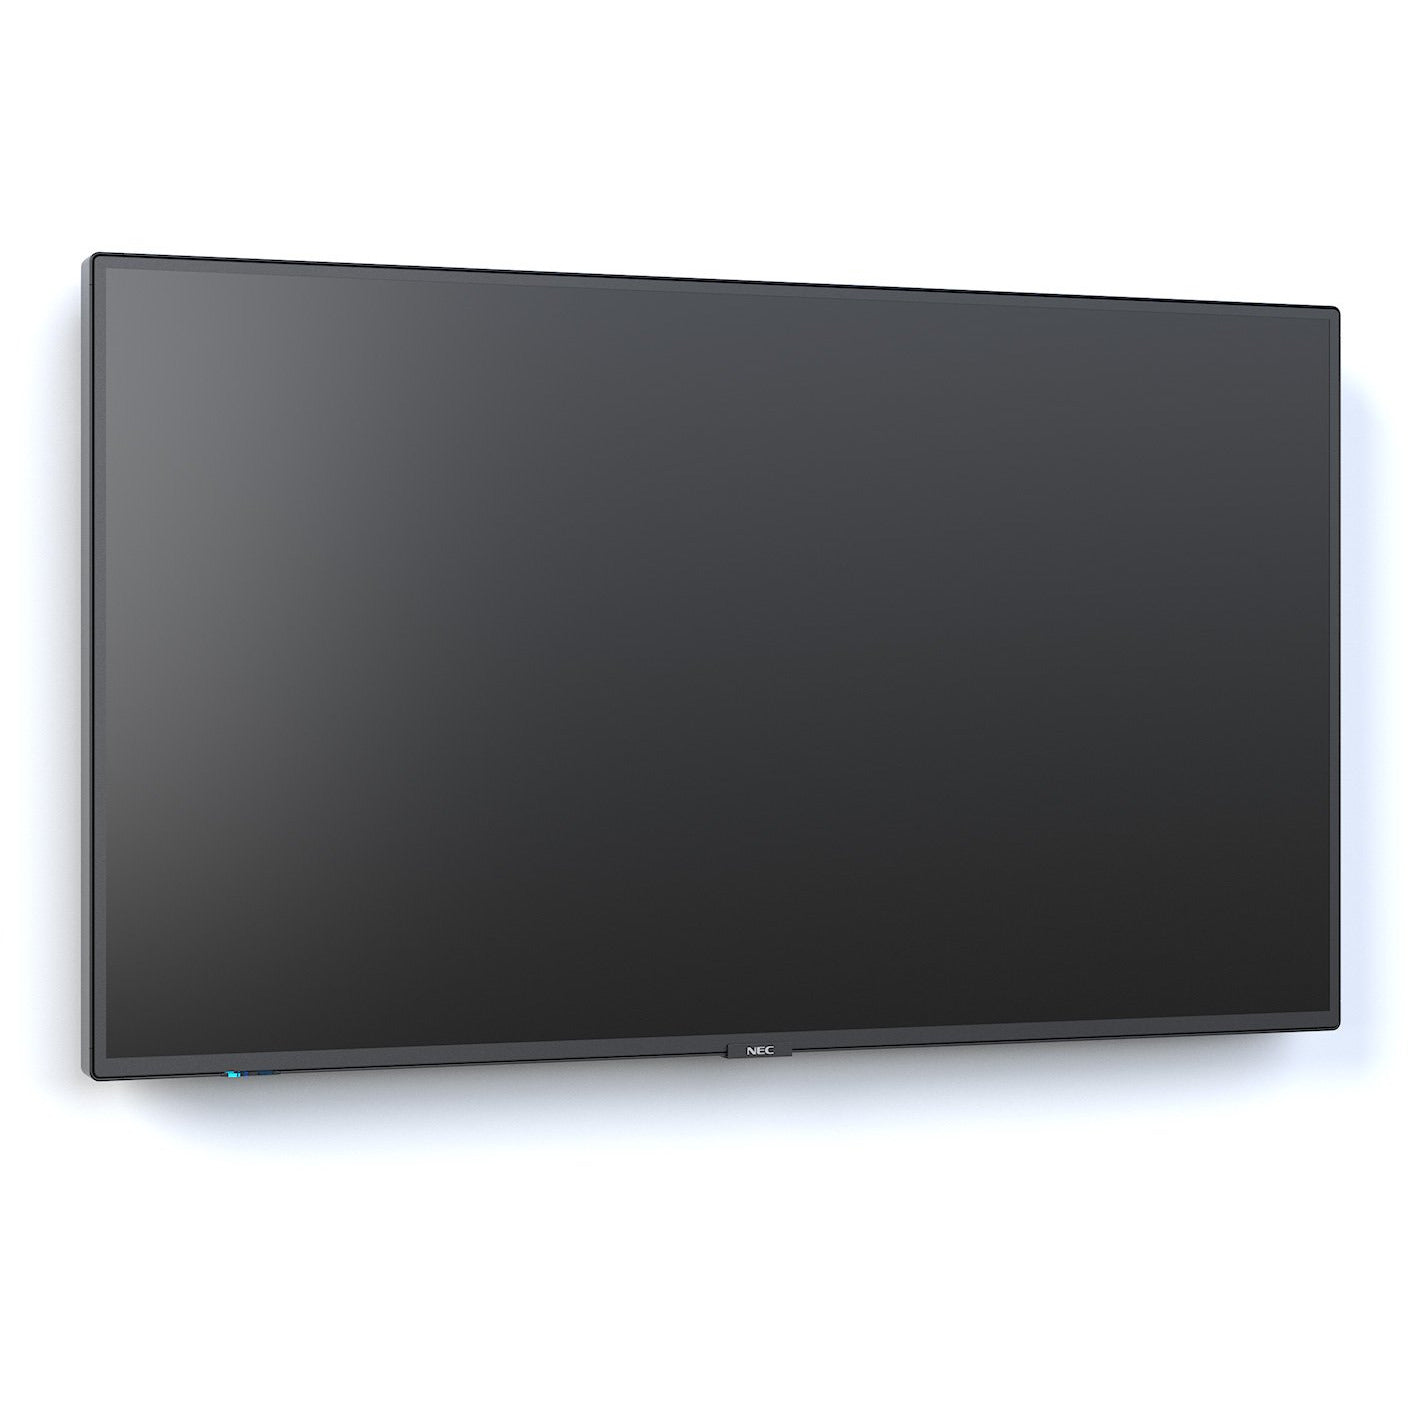 NEC MultiSync® M651-MPi4 LCD 65" Midrange Large Format Display (incl. NEC MediaPlayer)